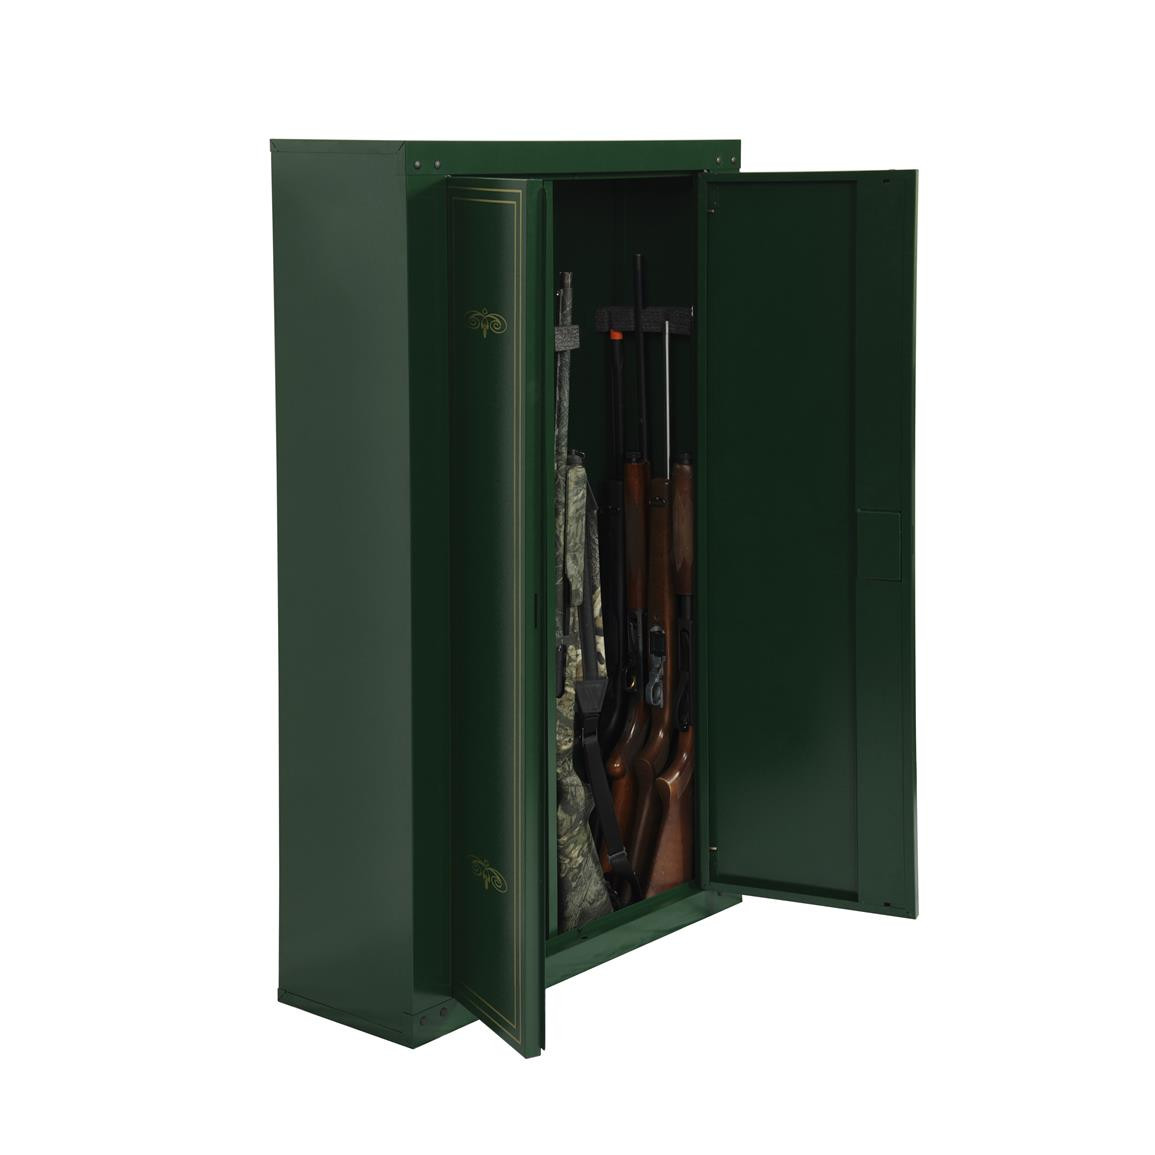 Best ideas about Metal Gun Cabinet
. Save or Pin American Furniture Classics 14 Gun Metal Cabinet Now.